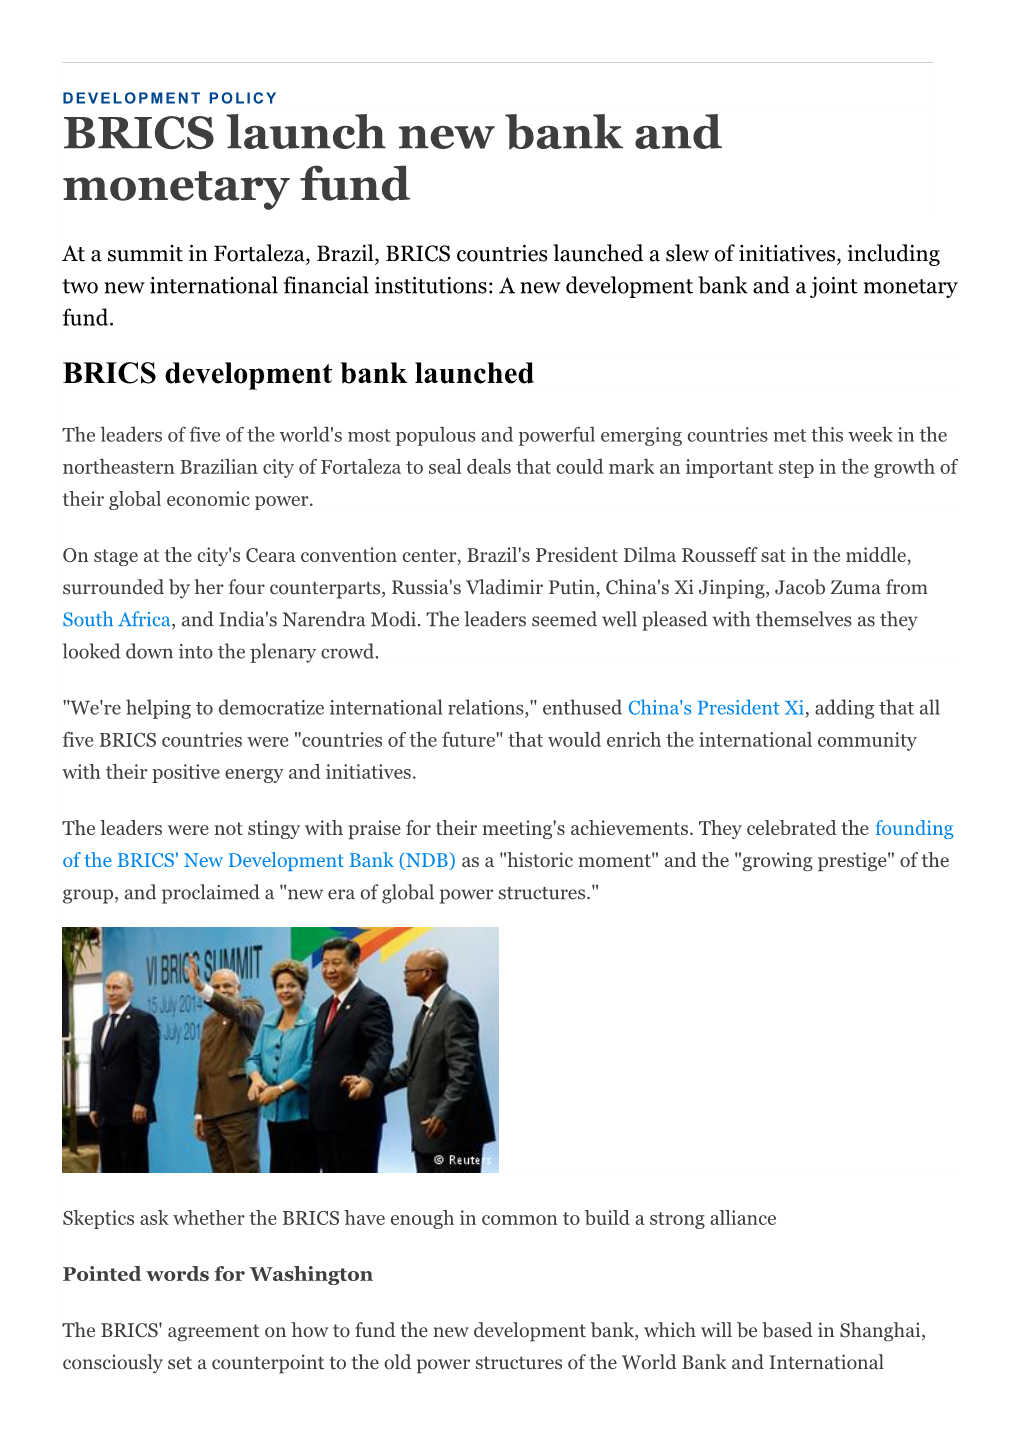 BRICS Launch New Bank and Monetary Fund